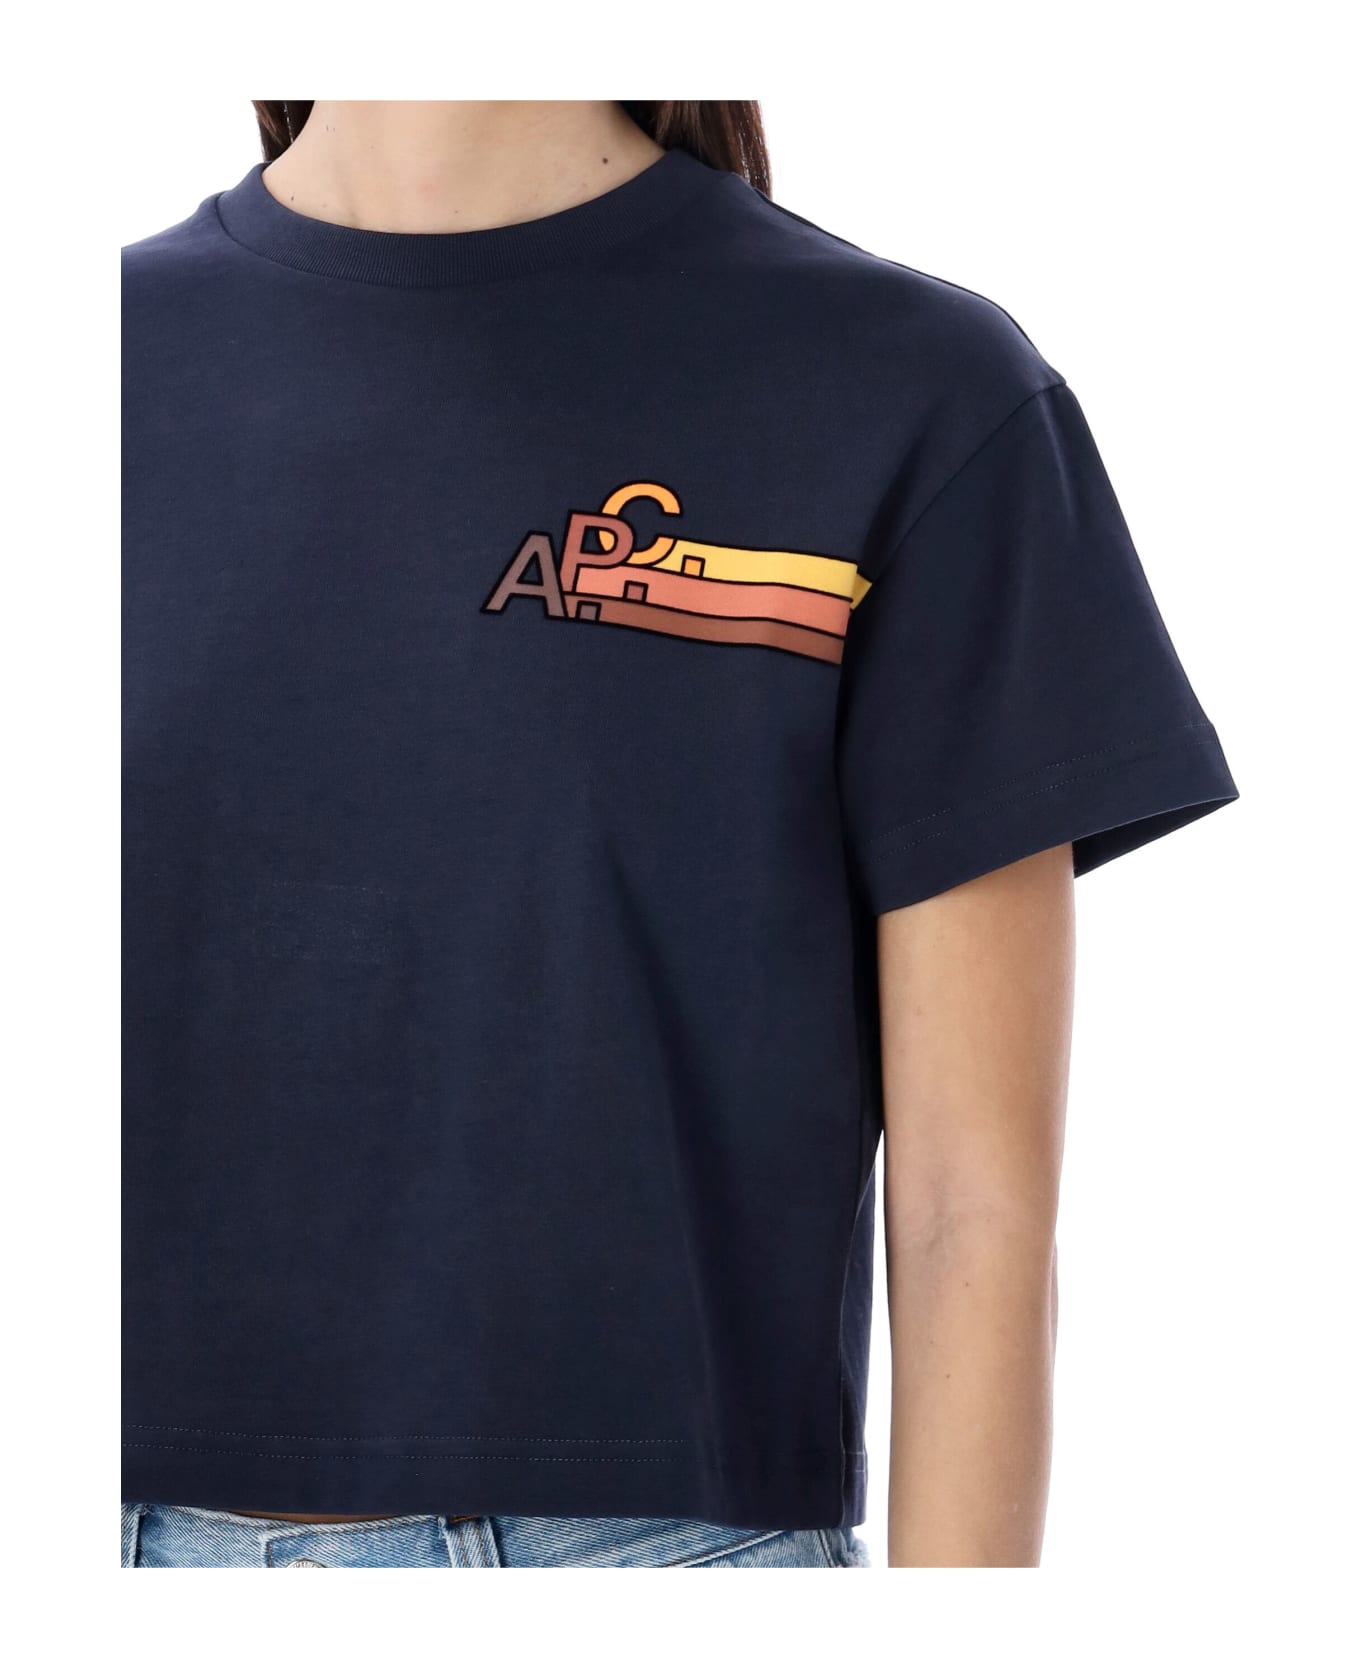 A.P.C. Sonia T-shirt - DARK NAVY